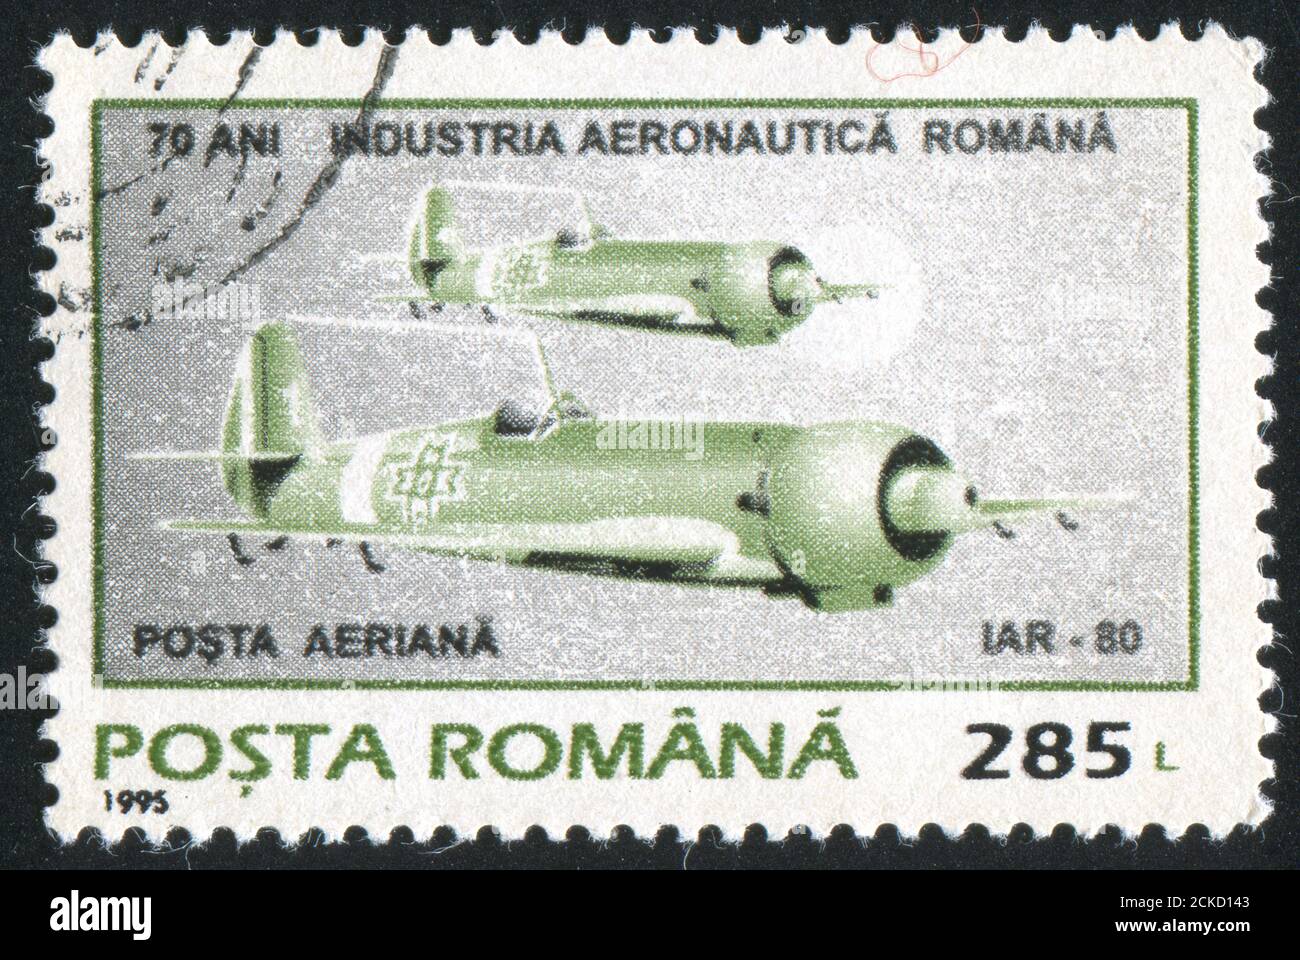 ROMANIA - CIRCA 1995: stamp printed by Romania, show plane, circa 1995. Stock Photo